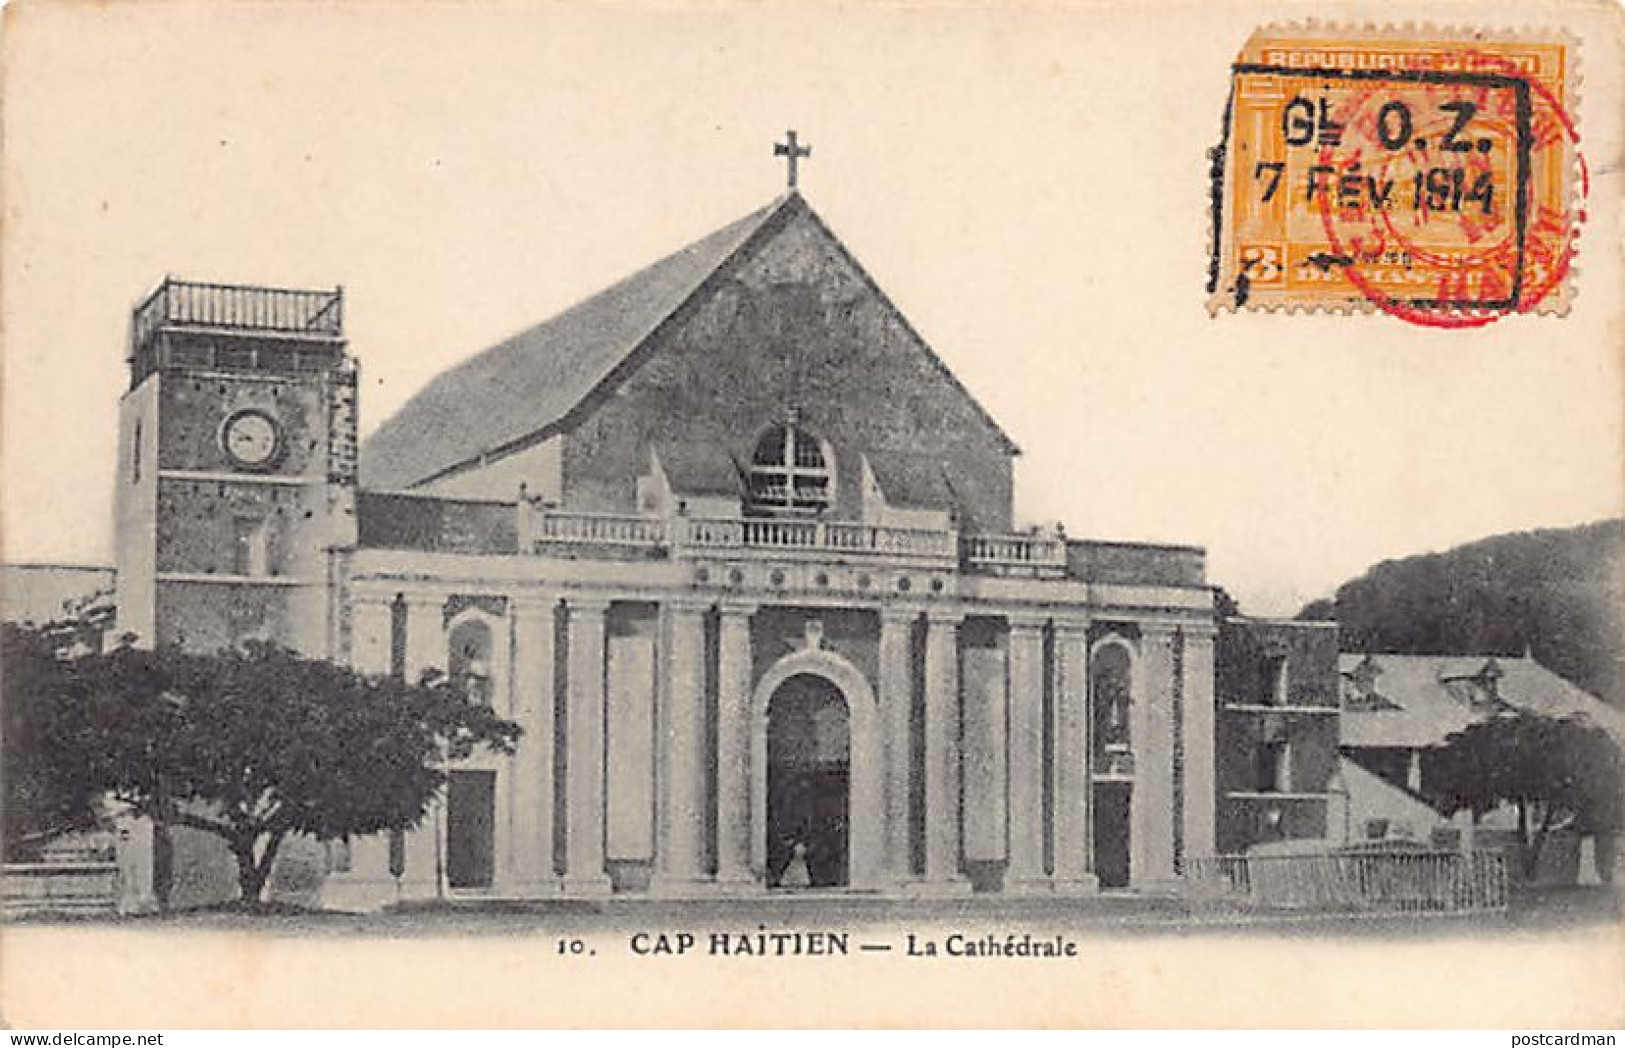 Haiti - CAP HAÏTIEN - La Cathédrale - Publ. Unknown 10 - Haiti